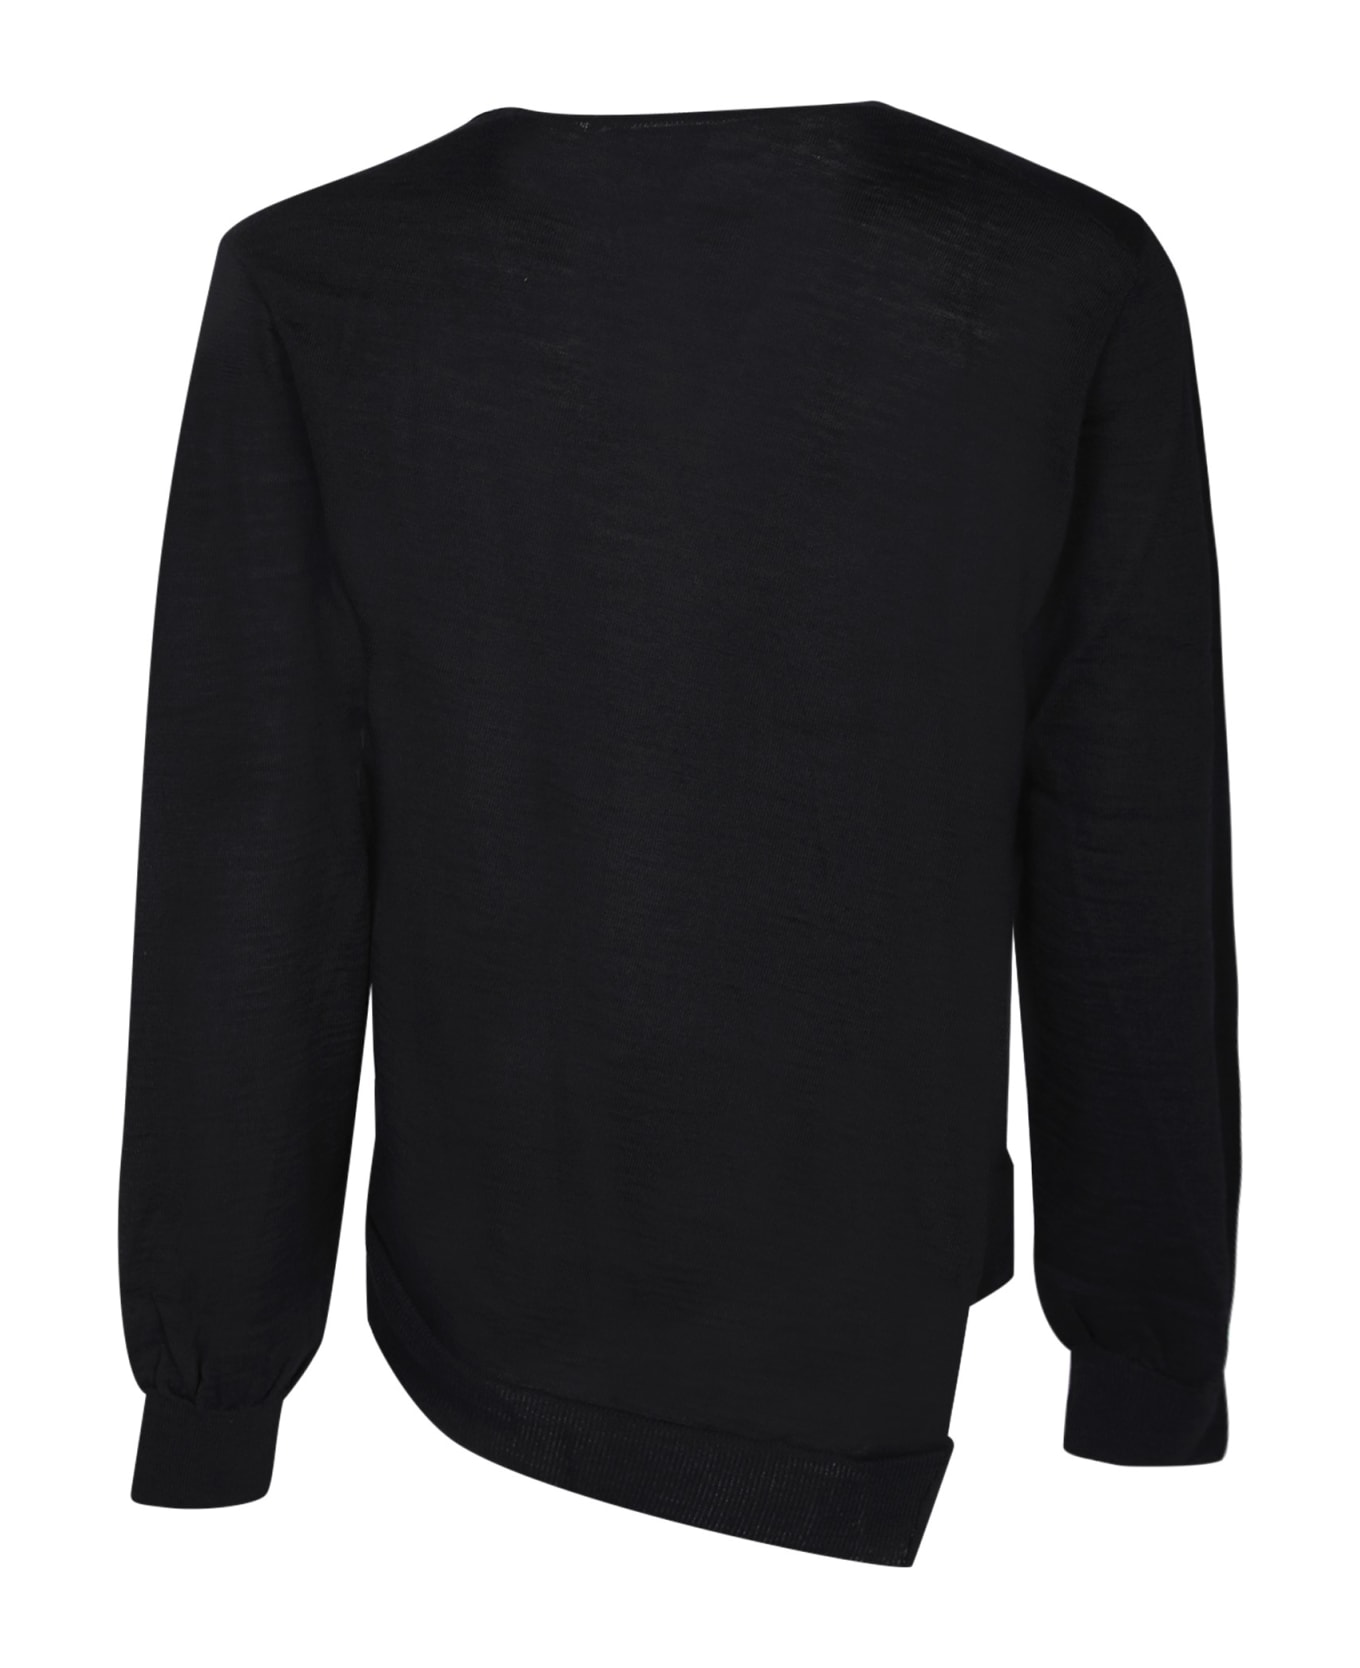 Comme des Garçons Shirt Asymmetric Black Pullover - Black